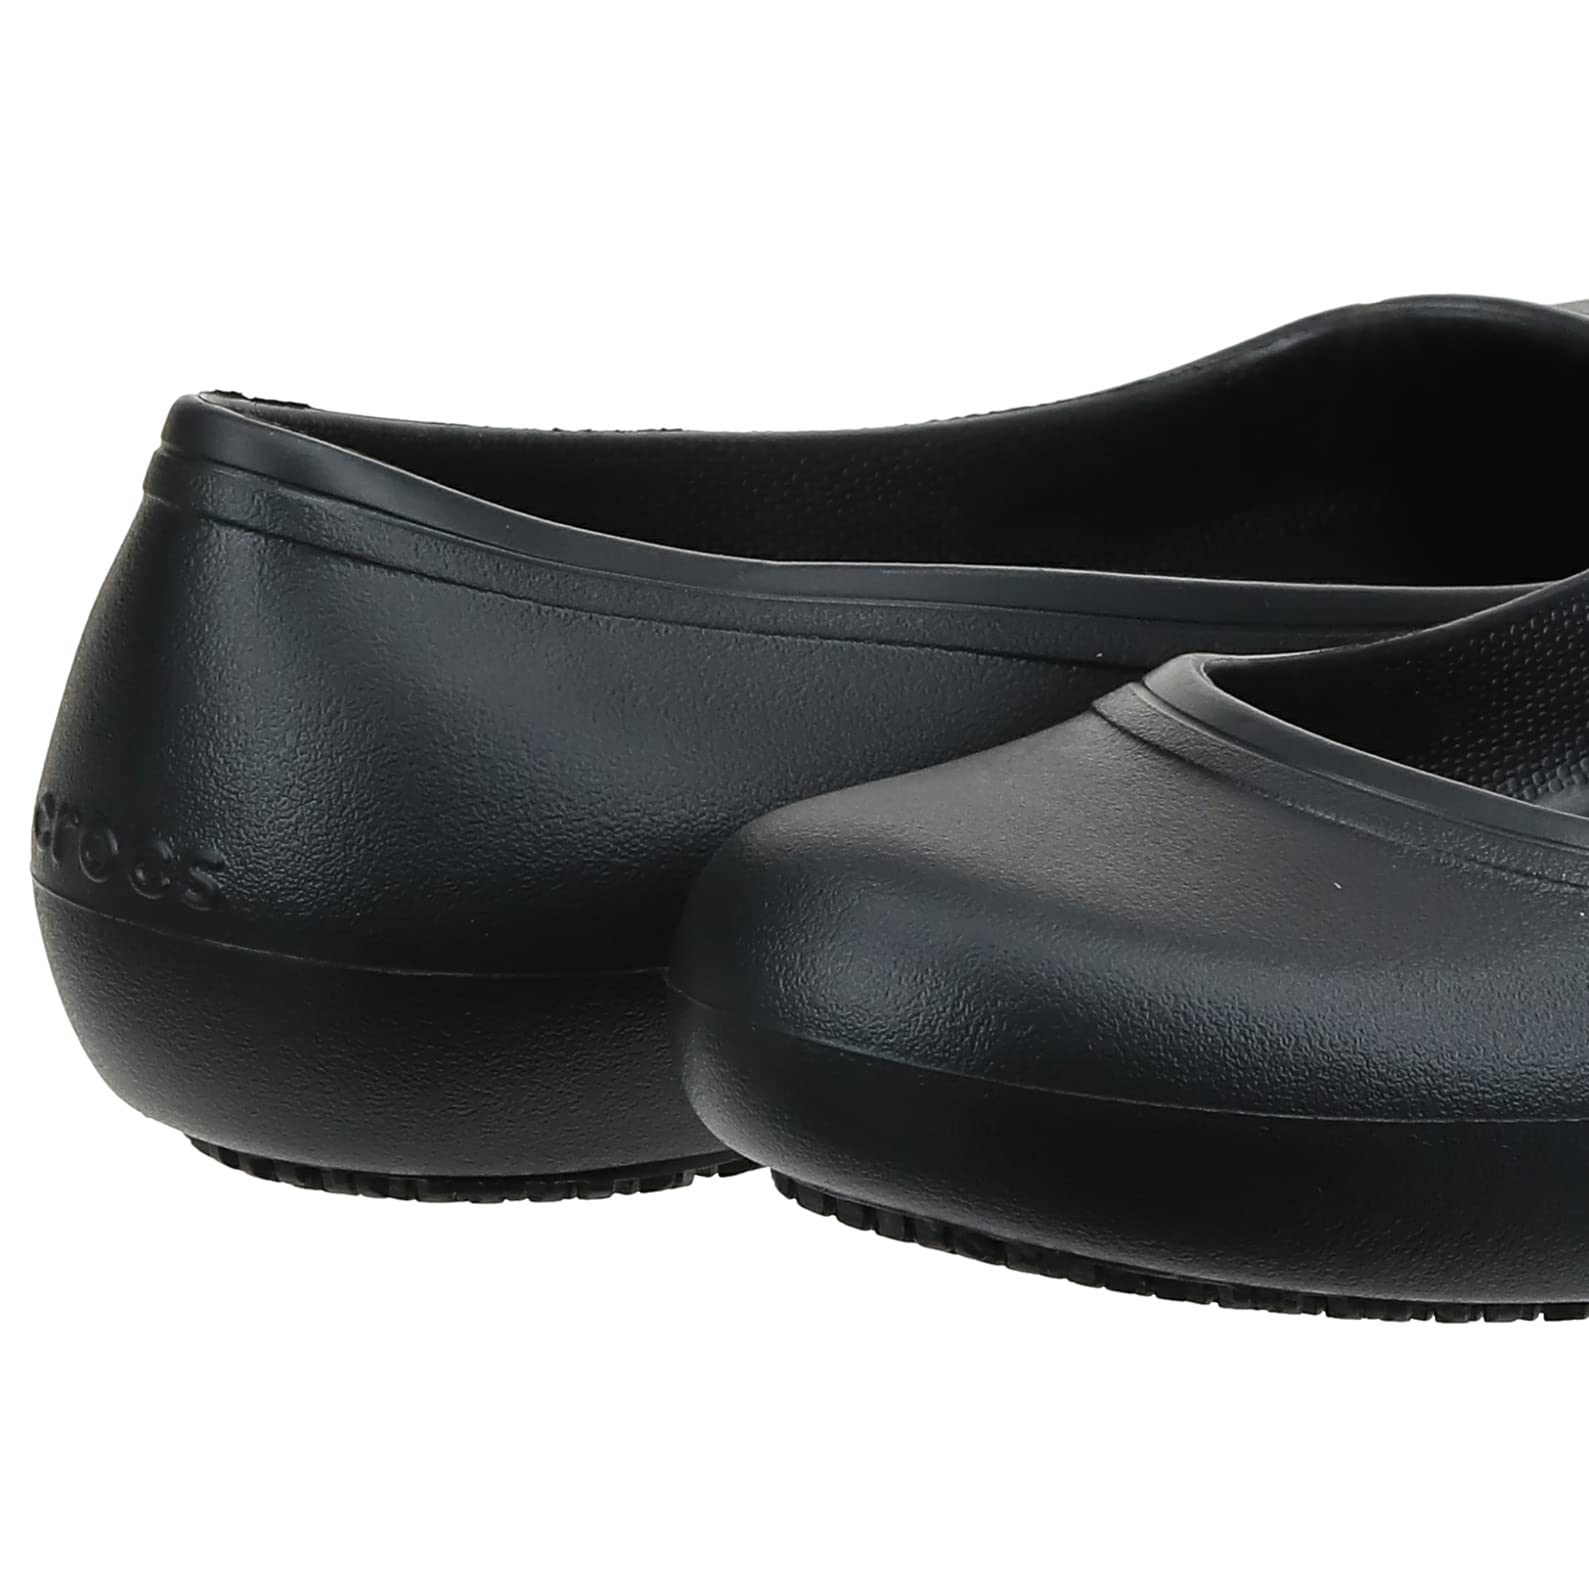 Crocs Women's Crocs At Work Flat | Women's Flats | Work Shoes for Women